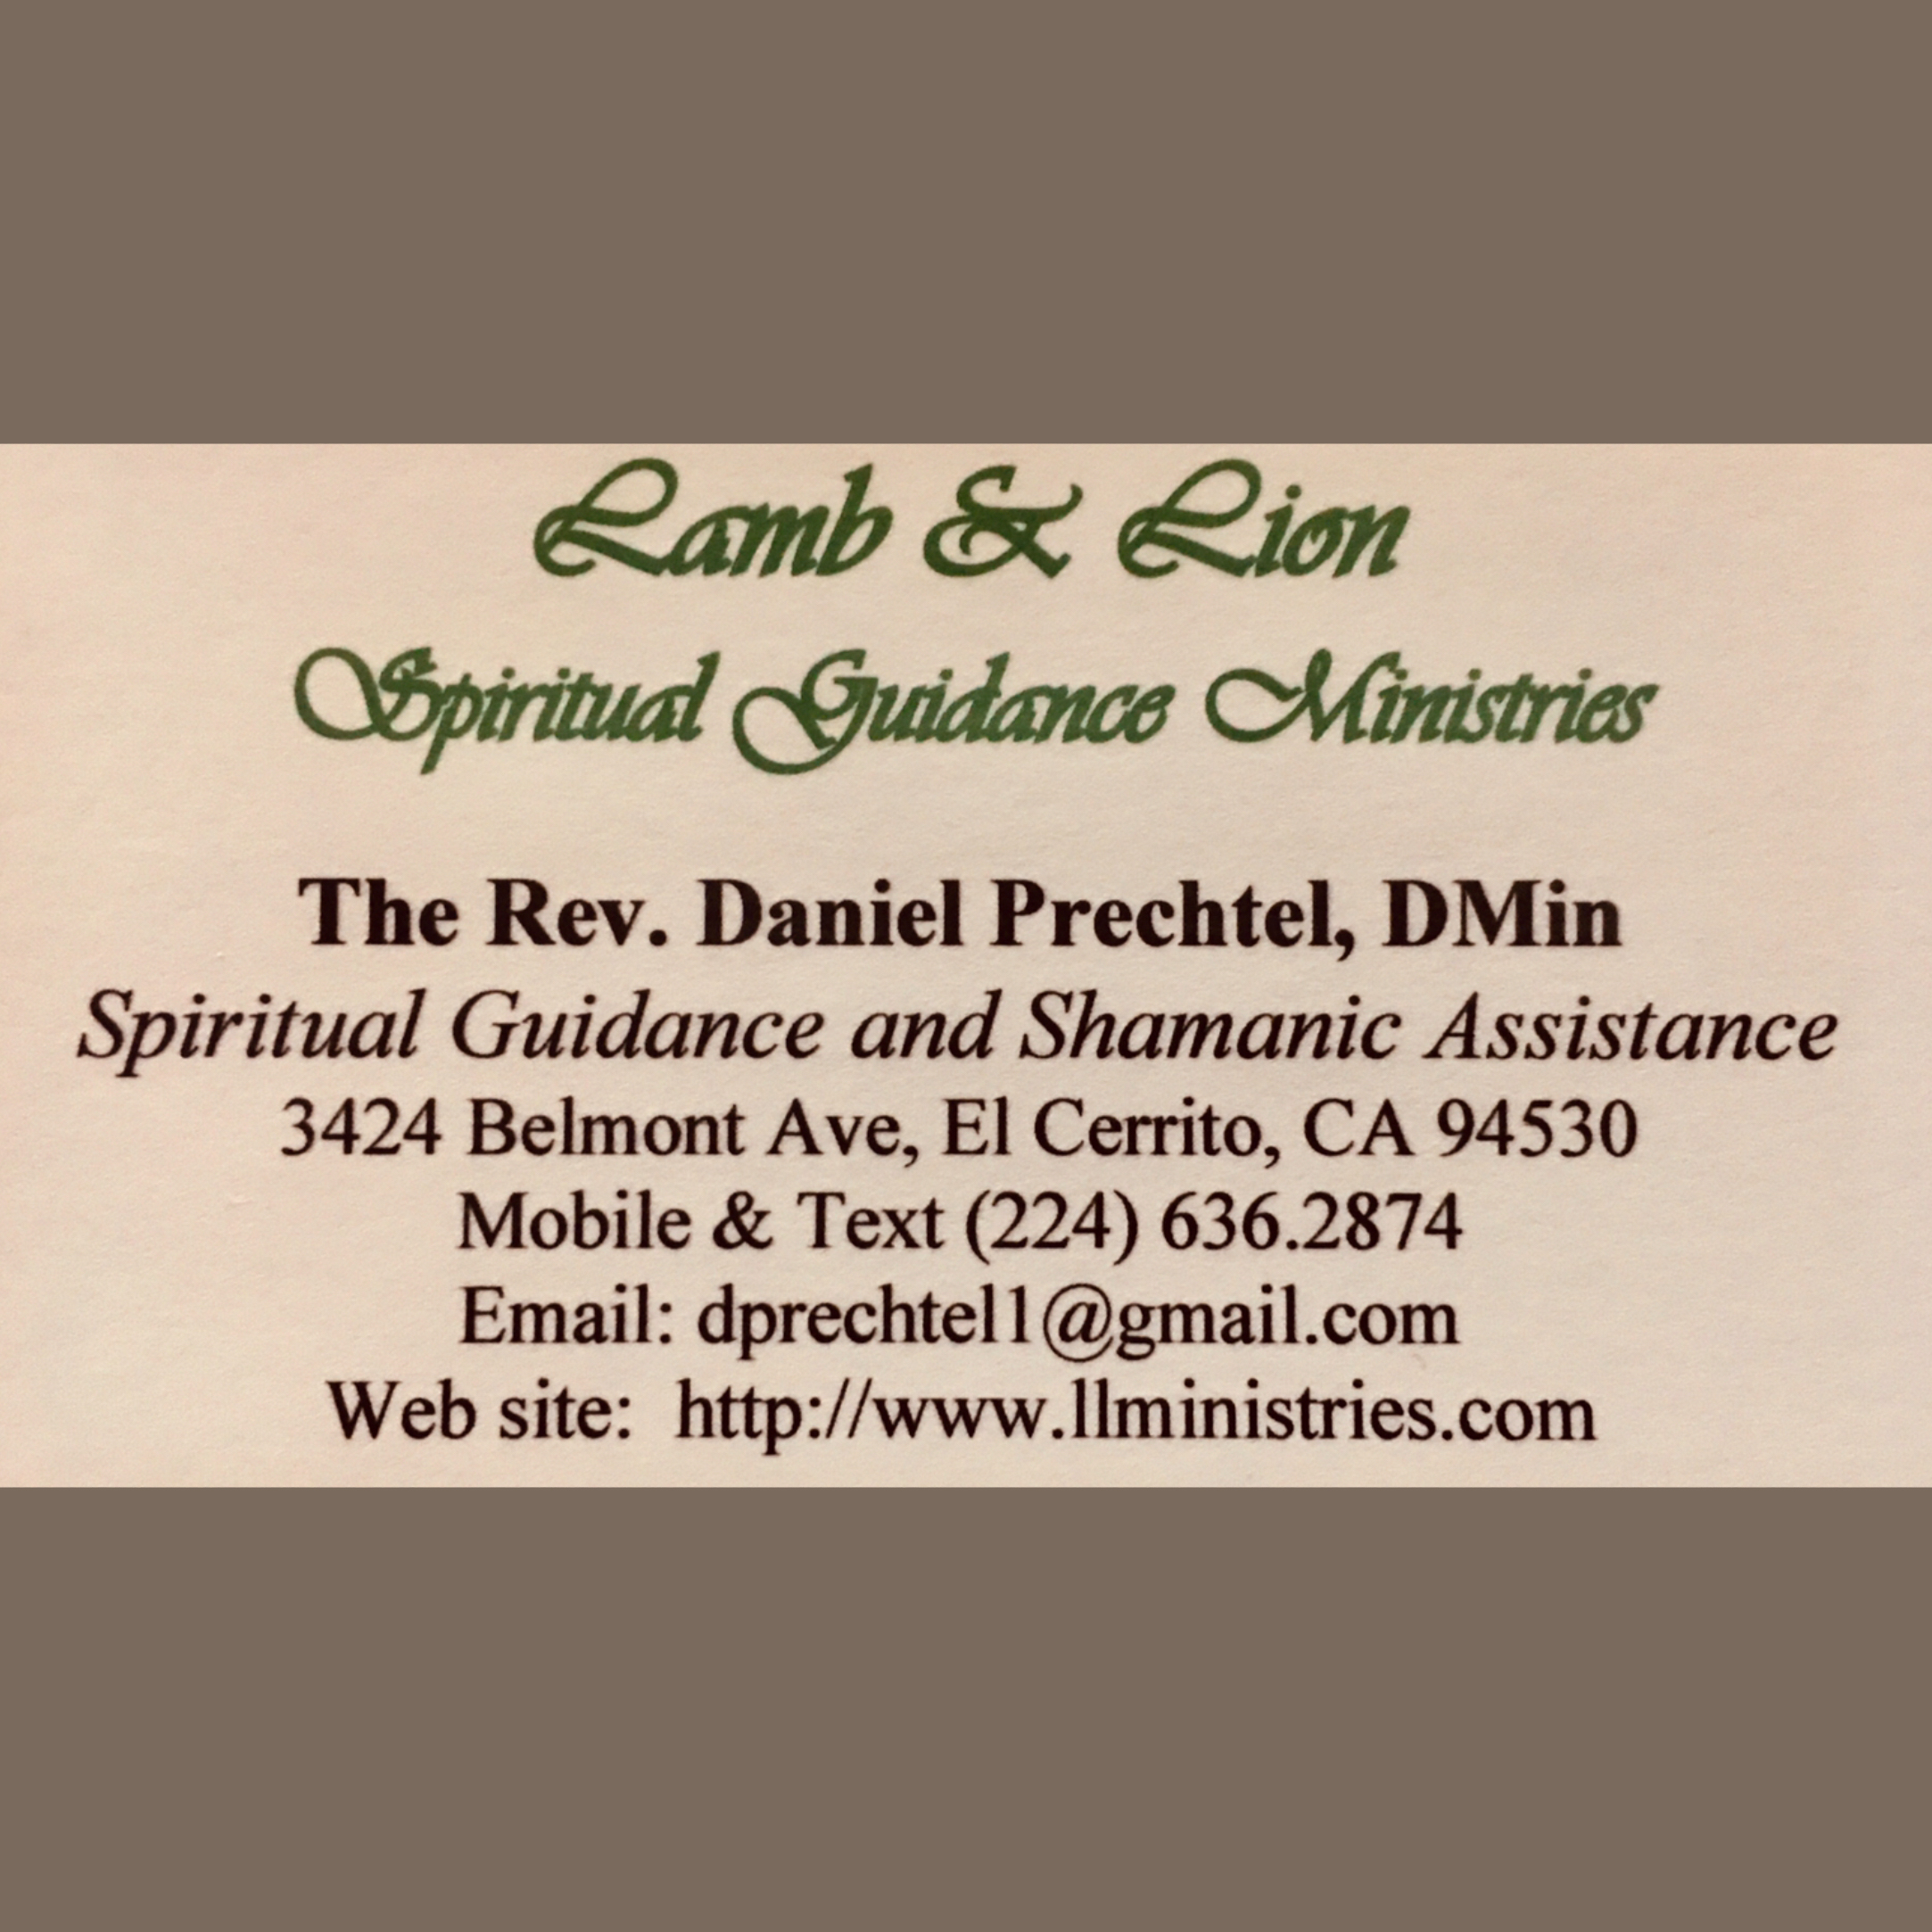 Lamb & Lion Spiritual Guidance Ministries